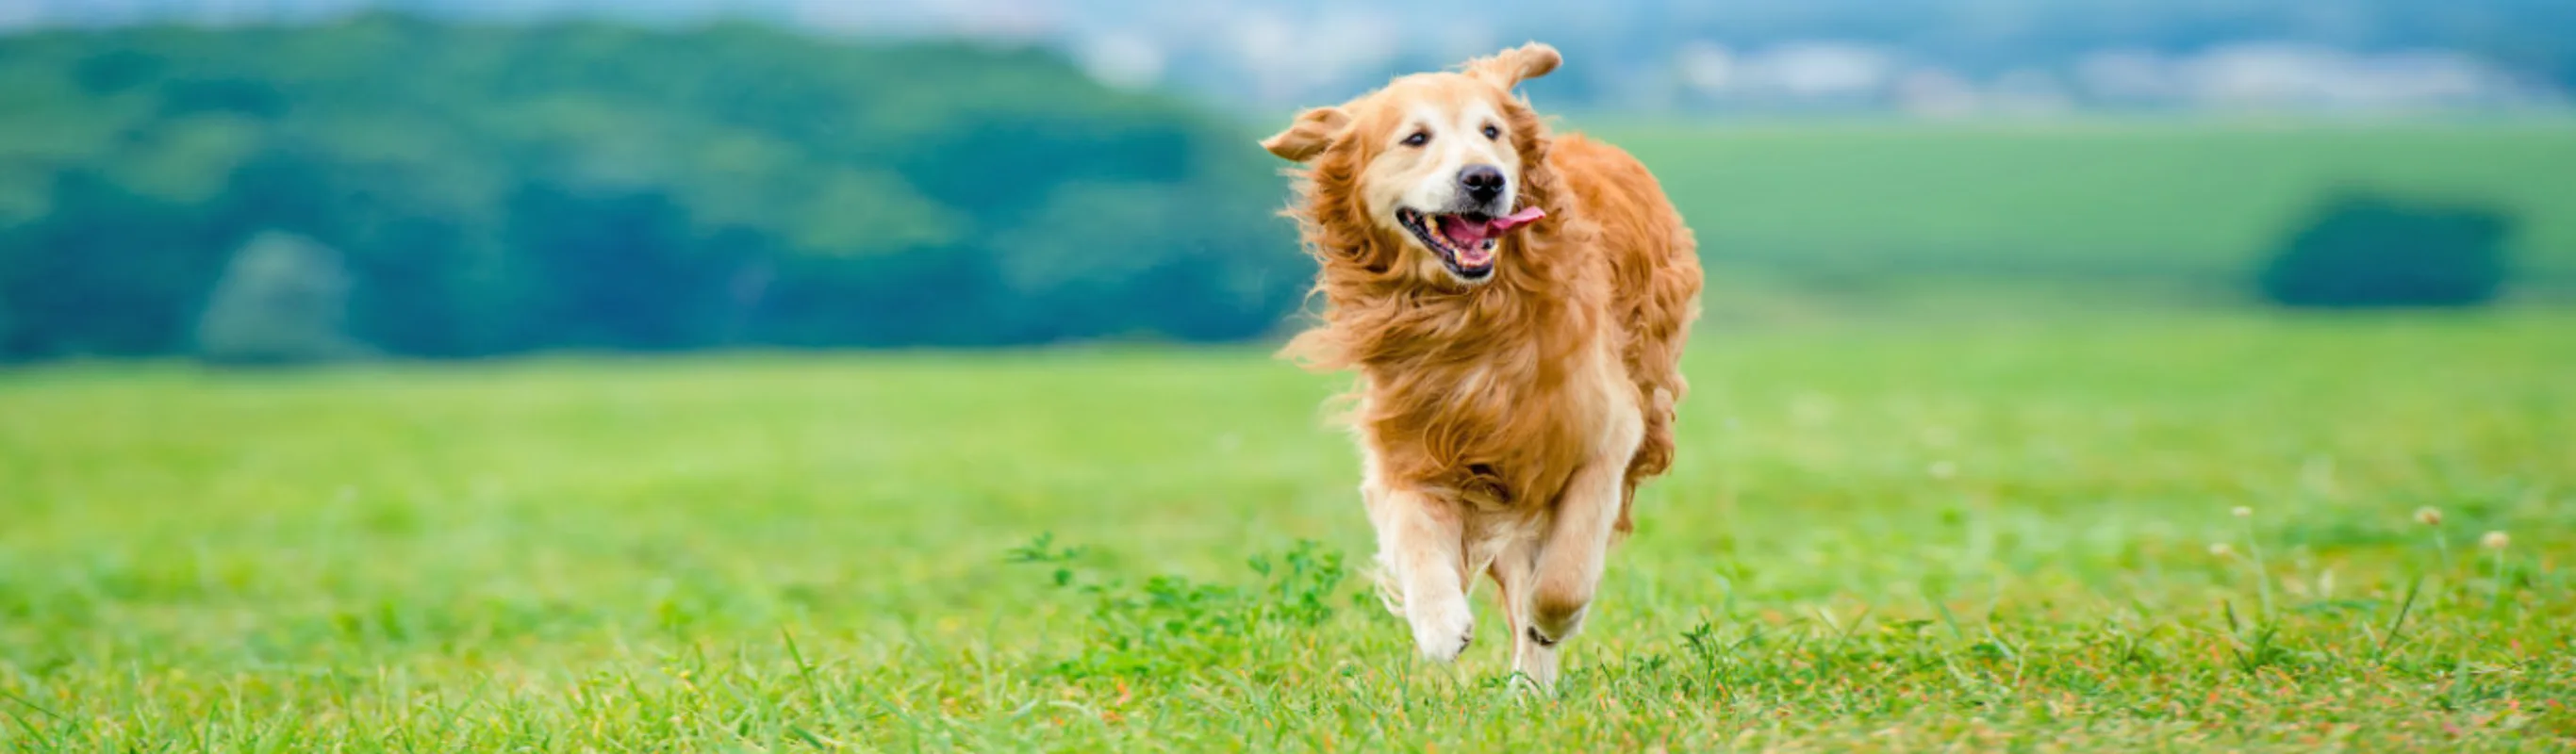 Brown Dog Running Through a Grassy Field